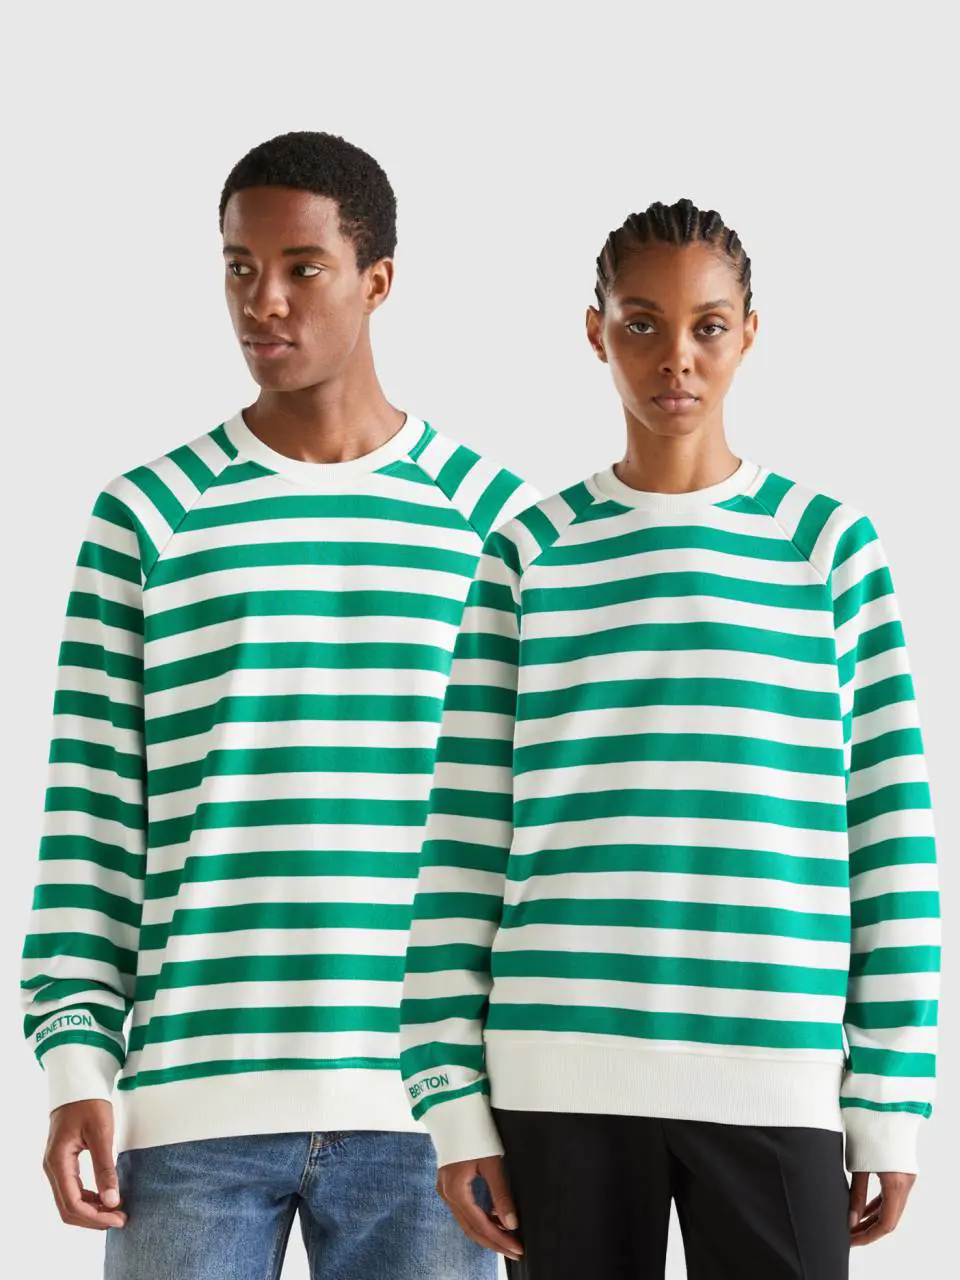 Benetton white and green striped sweatshirt. 1